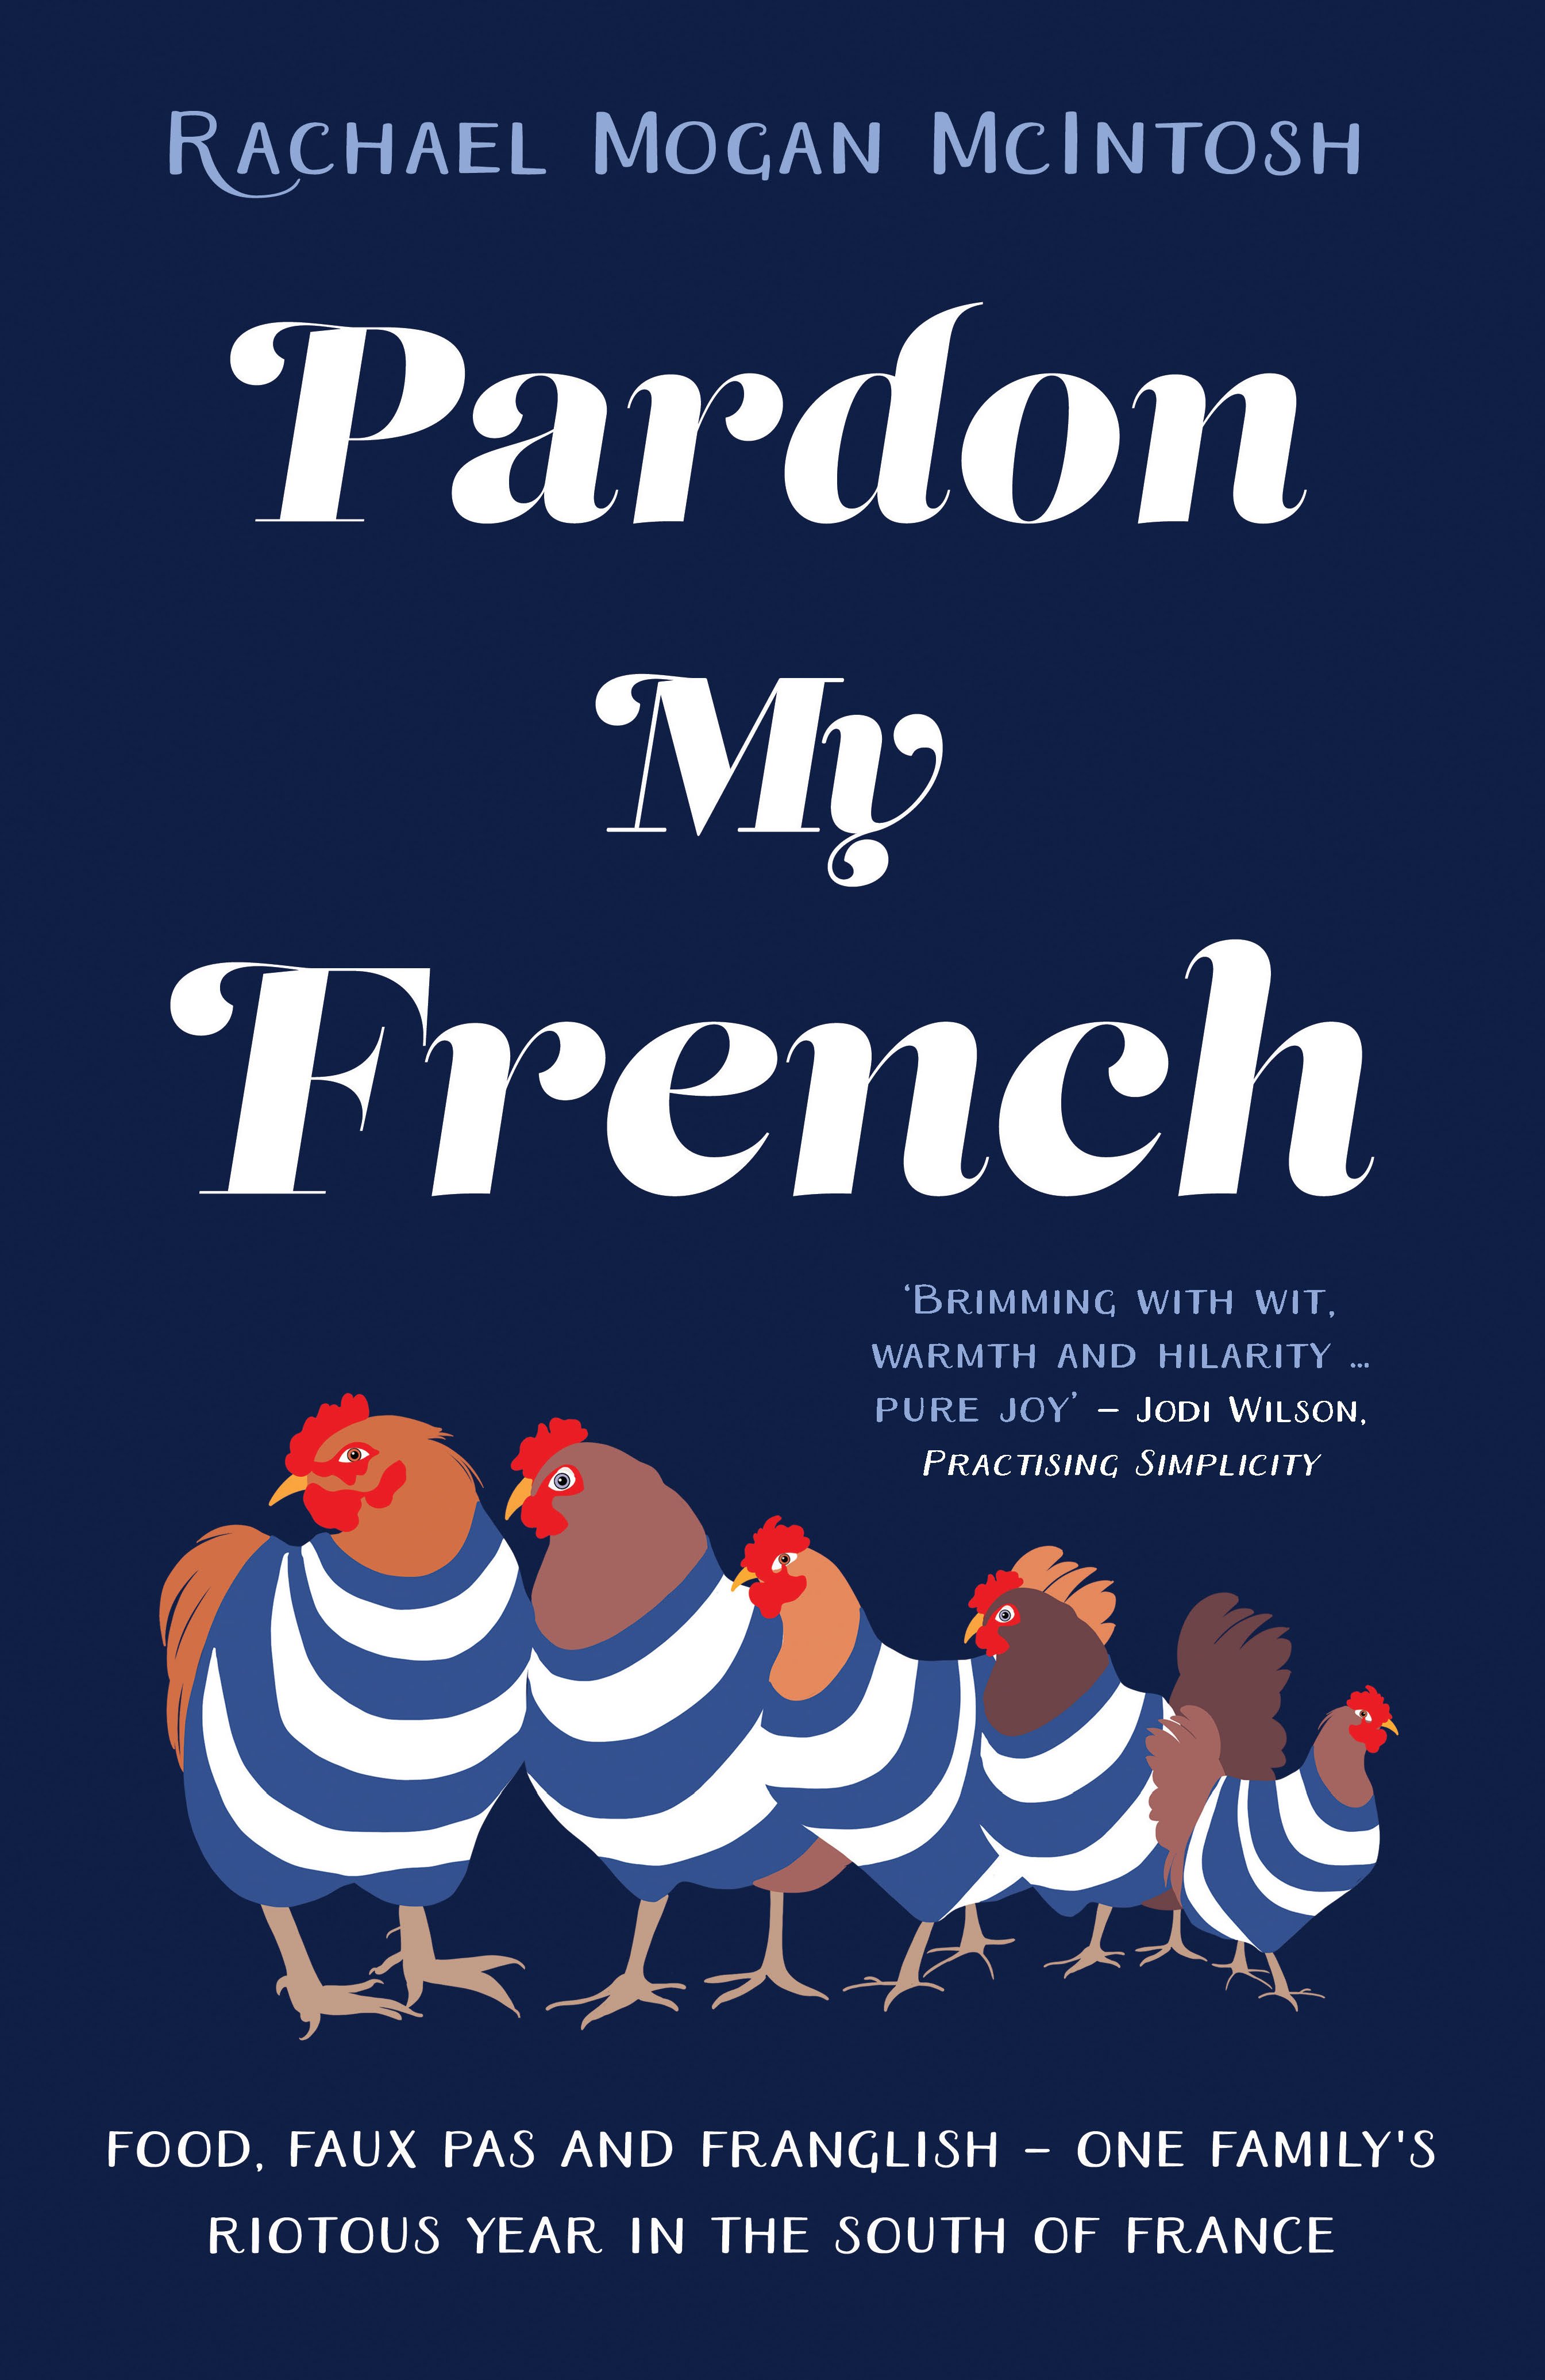 Rachel Mogan McIntosh book cover: Pardon My French